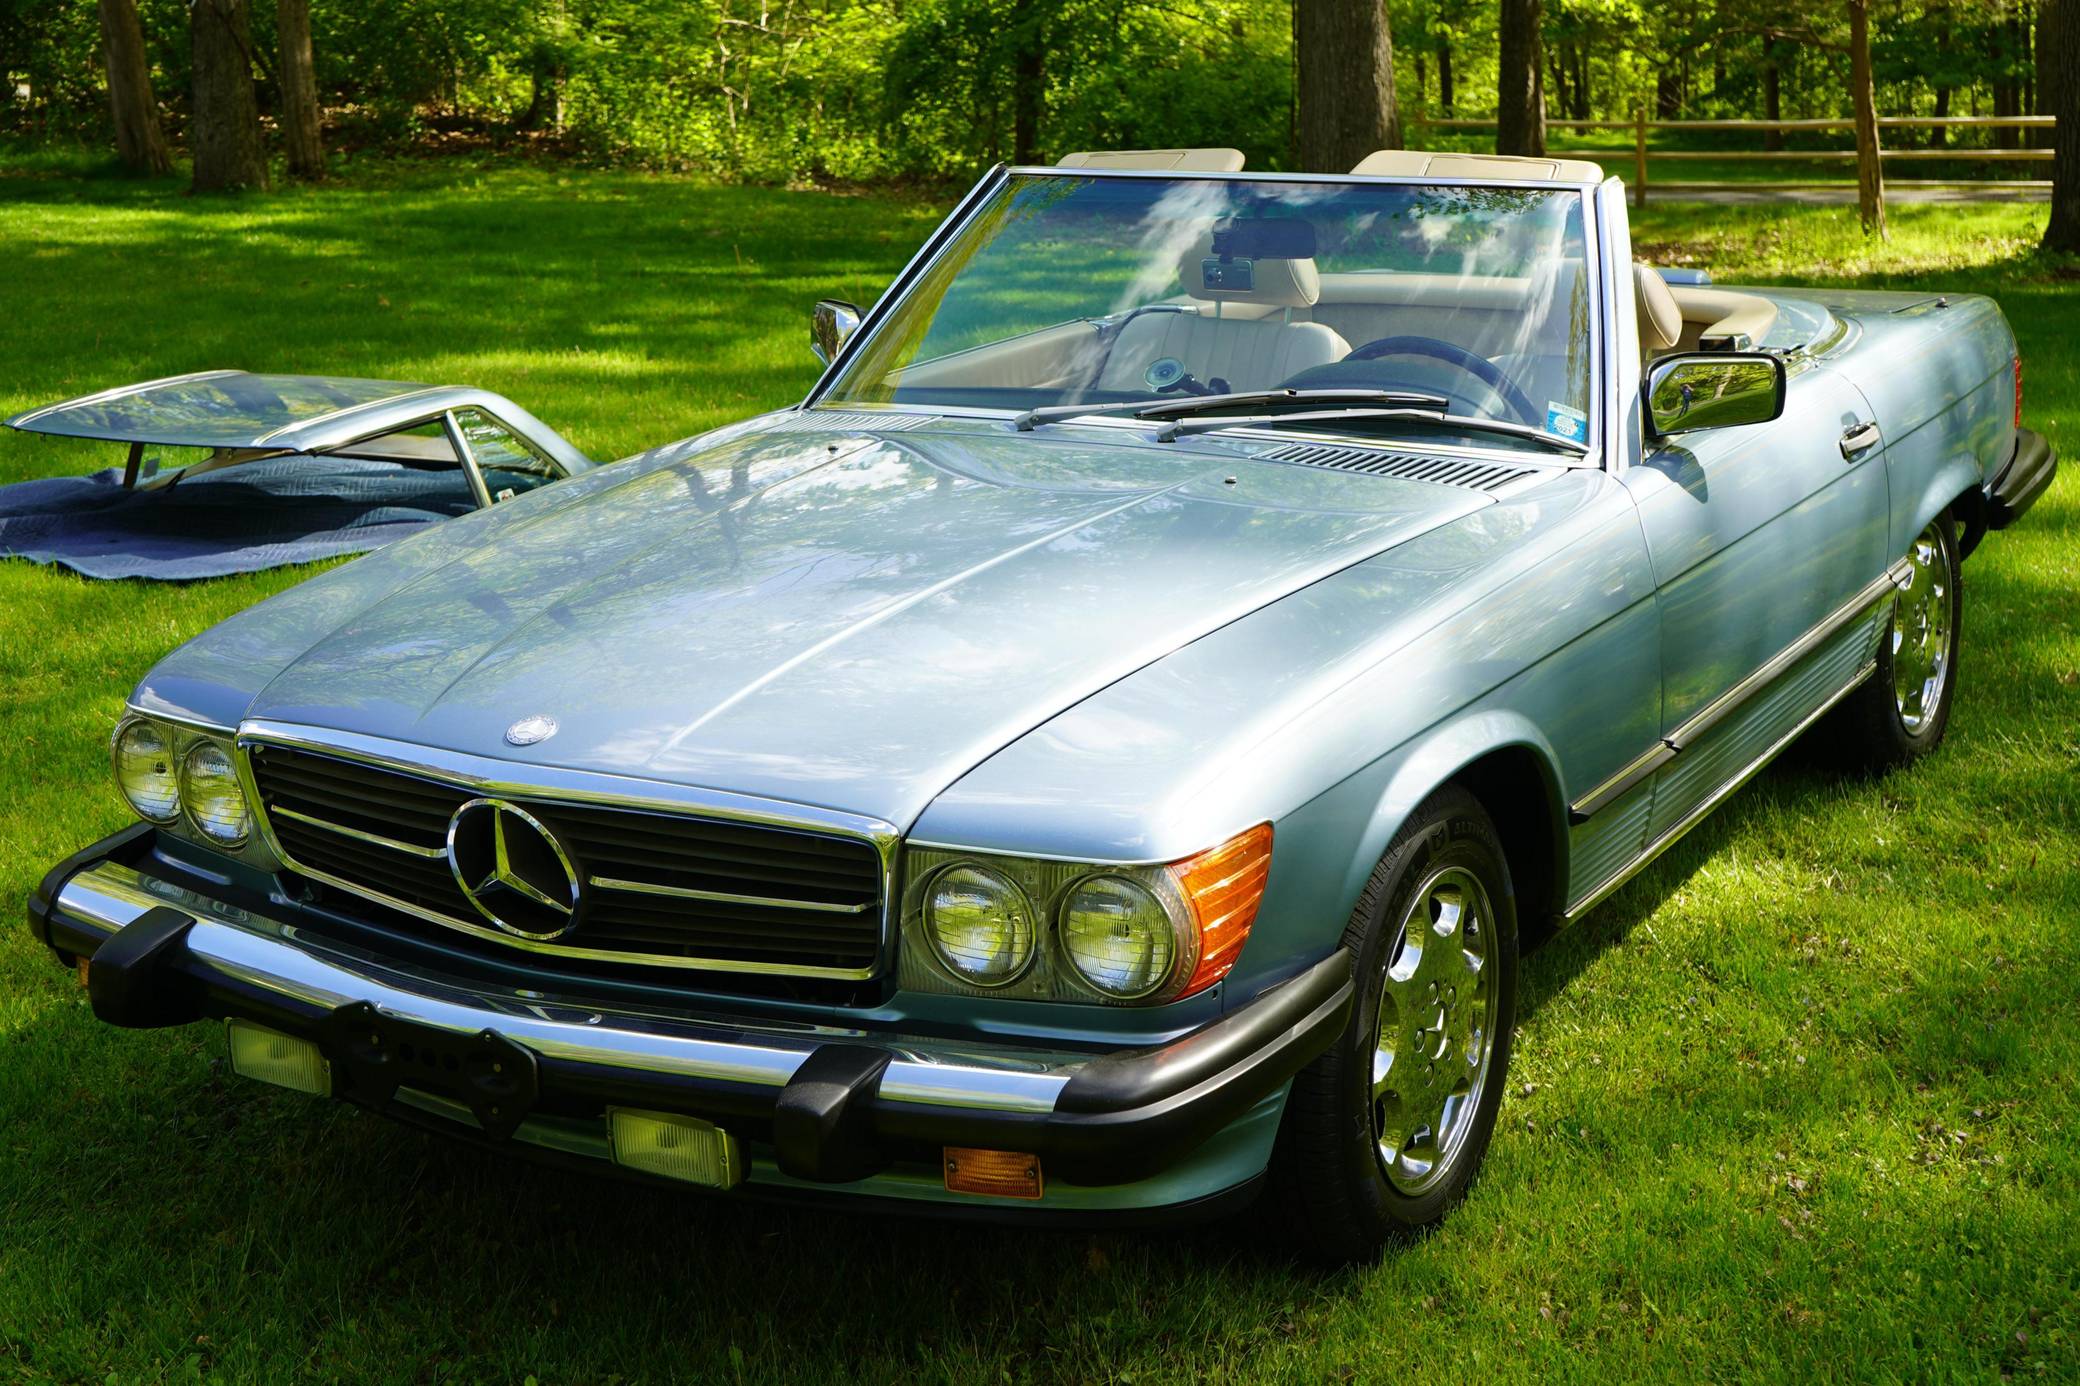 1988 Mercedes-Benz 300 SL Auto (R107) For Sale By Auction